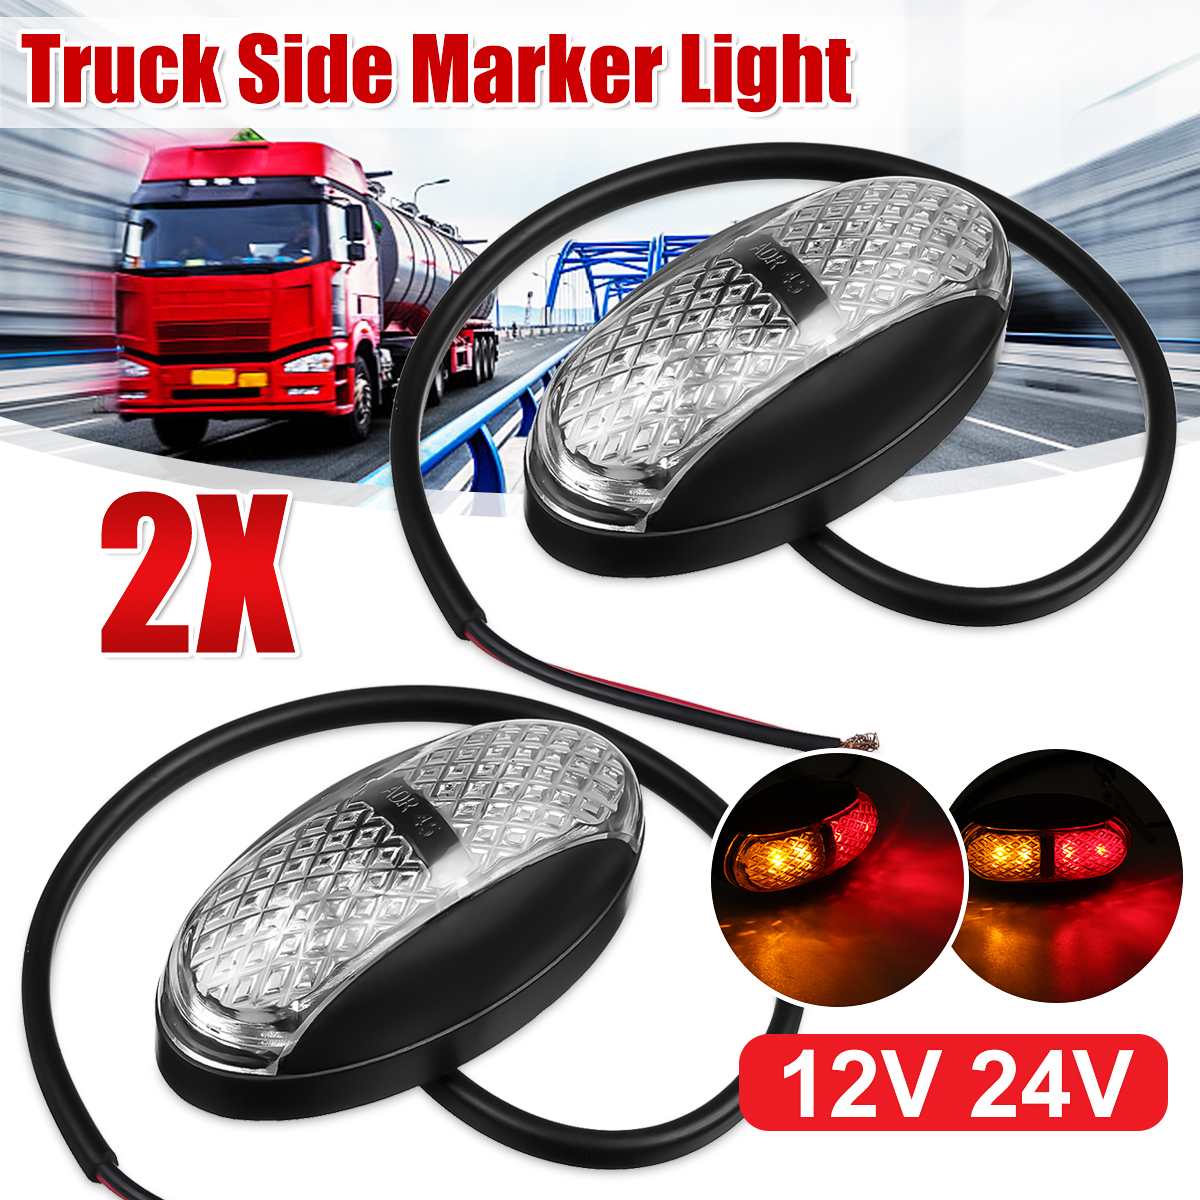 2 Stuks 4 Led 12V 24V Auto Vrachtwagen Side Marker Lampje Indicator Signaal Lamp Achterlicht vrachtwagen Bus Van Amber Rood